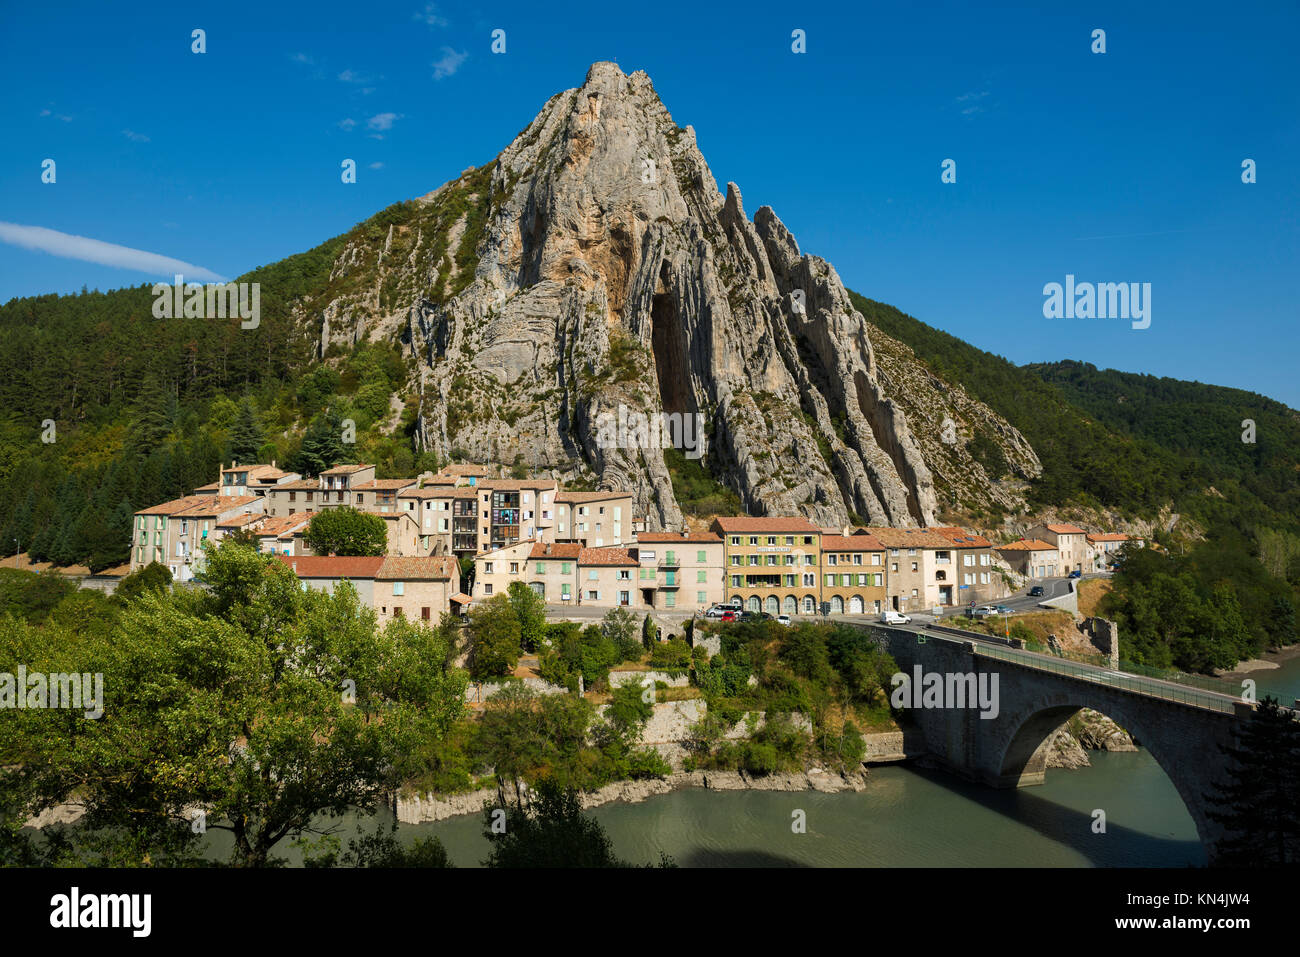 Bridge over the river Durance, Sisteron, Provence, Region Provence-Alpes-Côte d' Azur, South of France, France Stock Photo